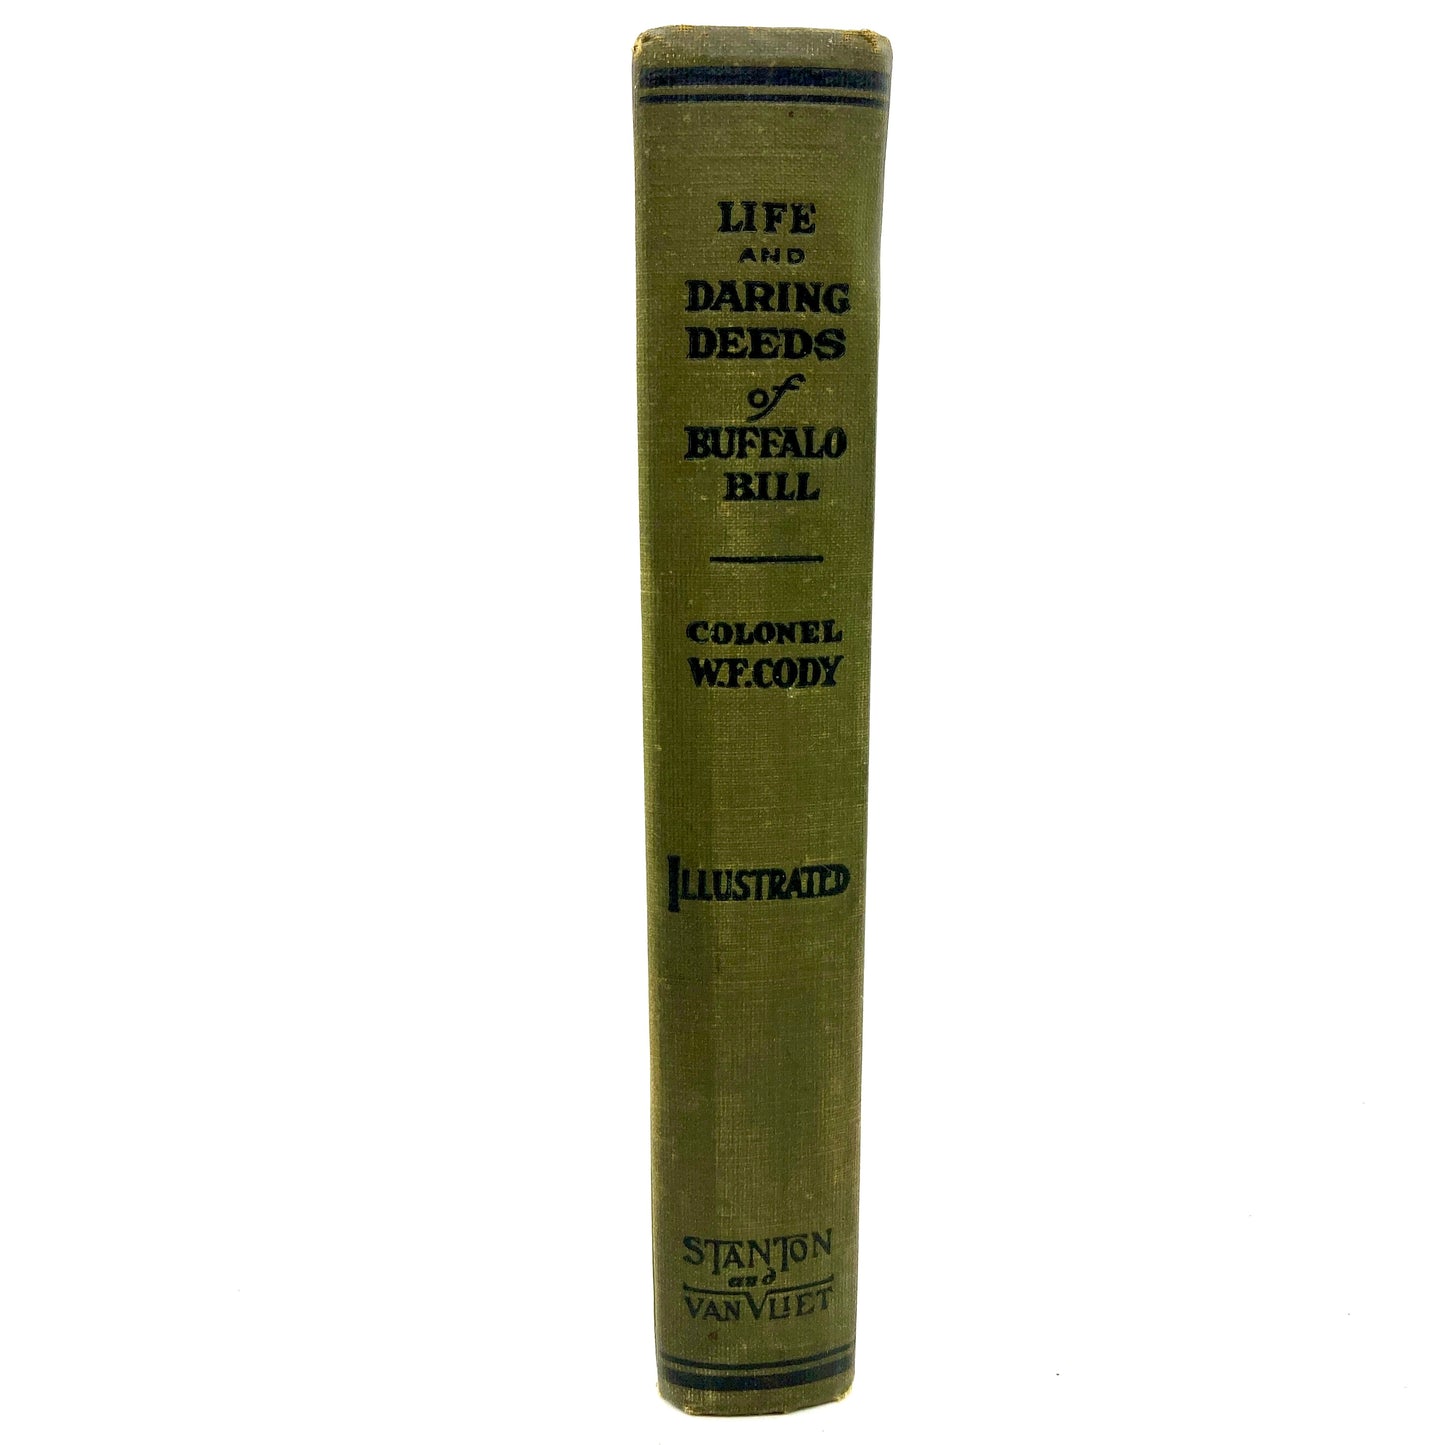 CODY, Buffalo Bill "Life and Adventures of Buffalo Bill" [Stanton & Van Vliet, 1917] 1st Edition